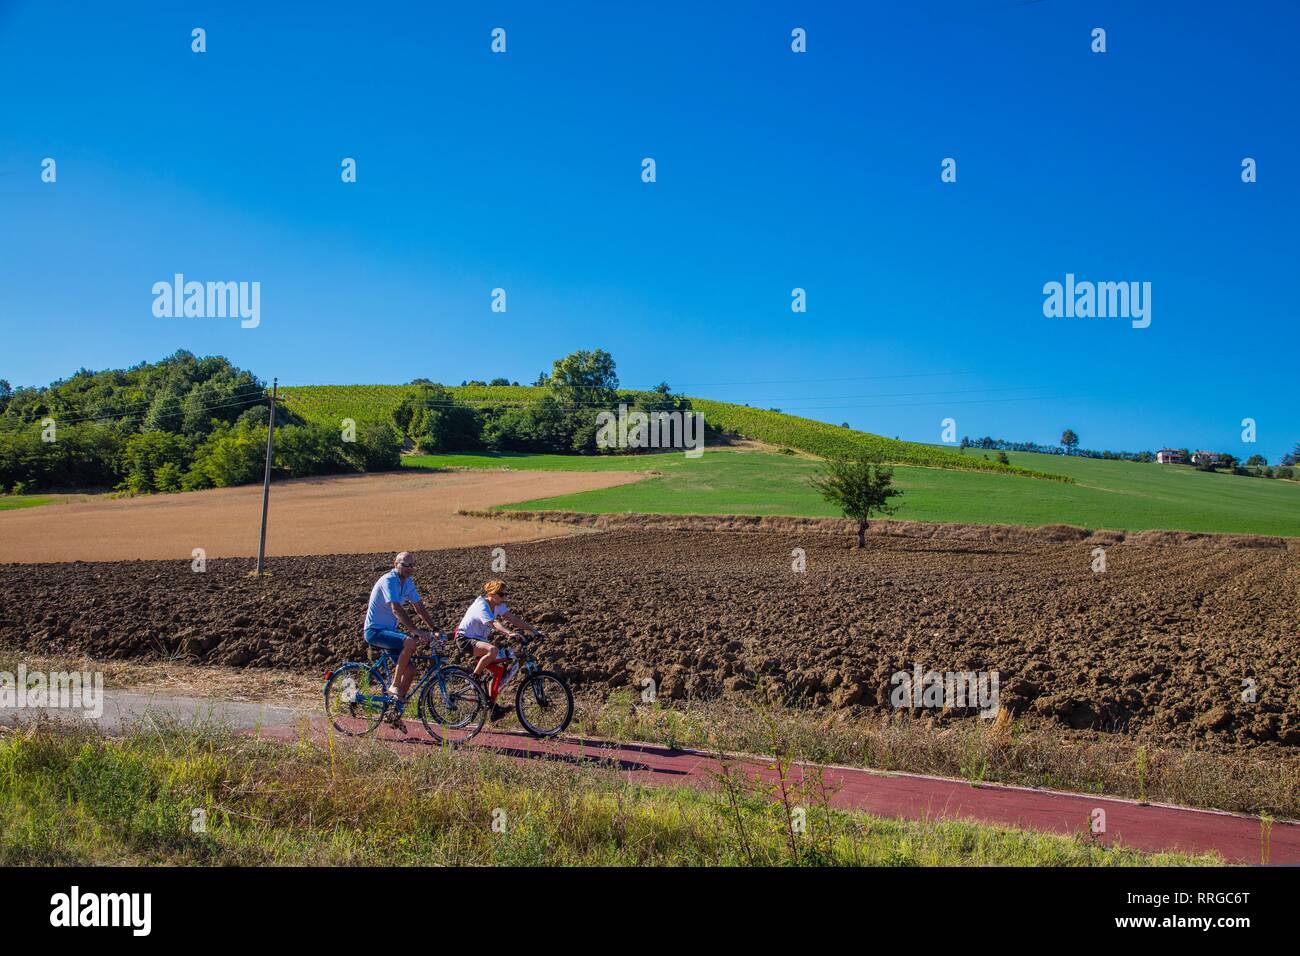 On the Fausto Coppi's roads, the cycling route from Villaromagnano to Castellania, Tortona area, Alessandria, Piedmont, Italy, Europe Stock Photo